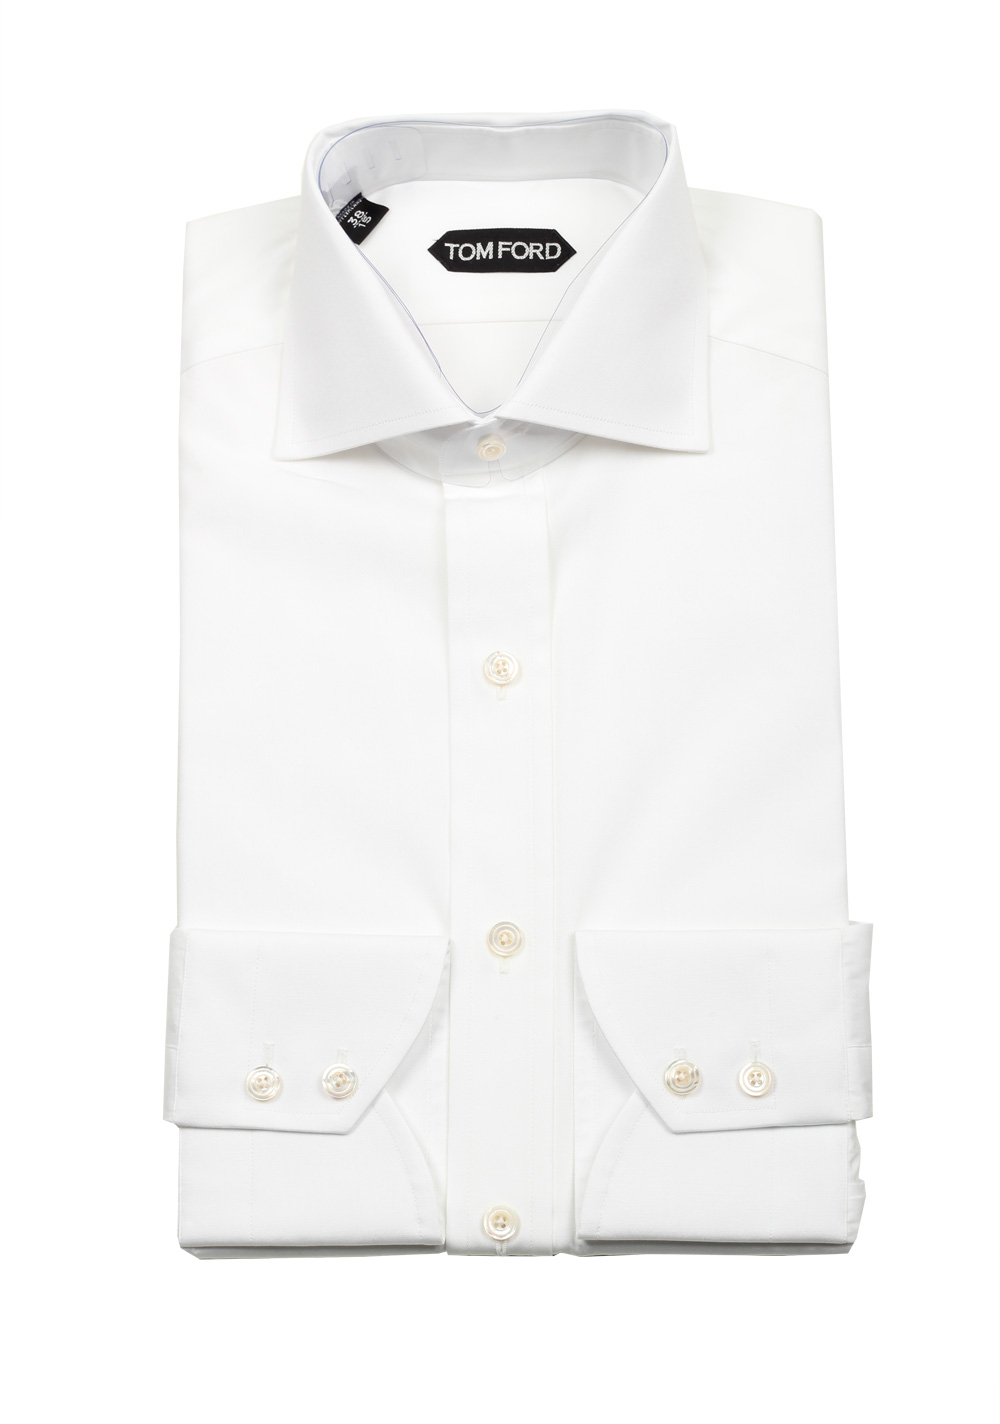 TOM FORD Solid White Dress Spread Shirt Barrel Cuffs Size 38 / 15 U.S. Slim Fit | Costume Limité